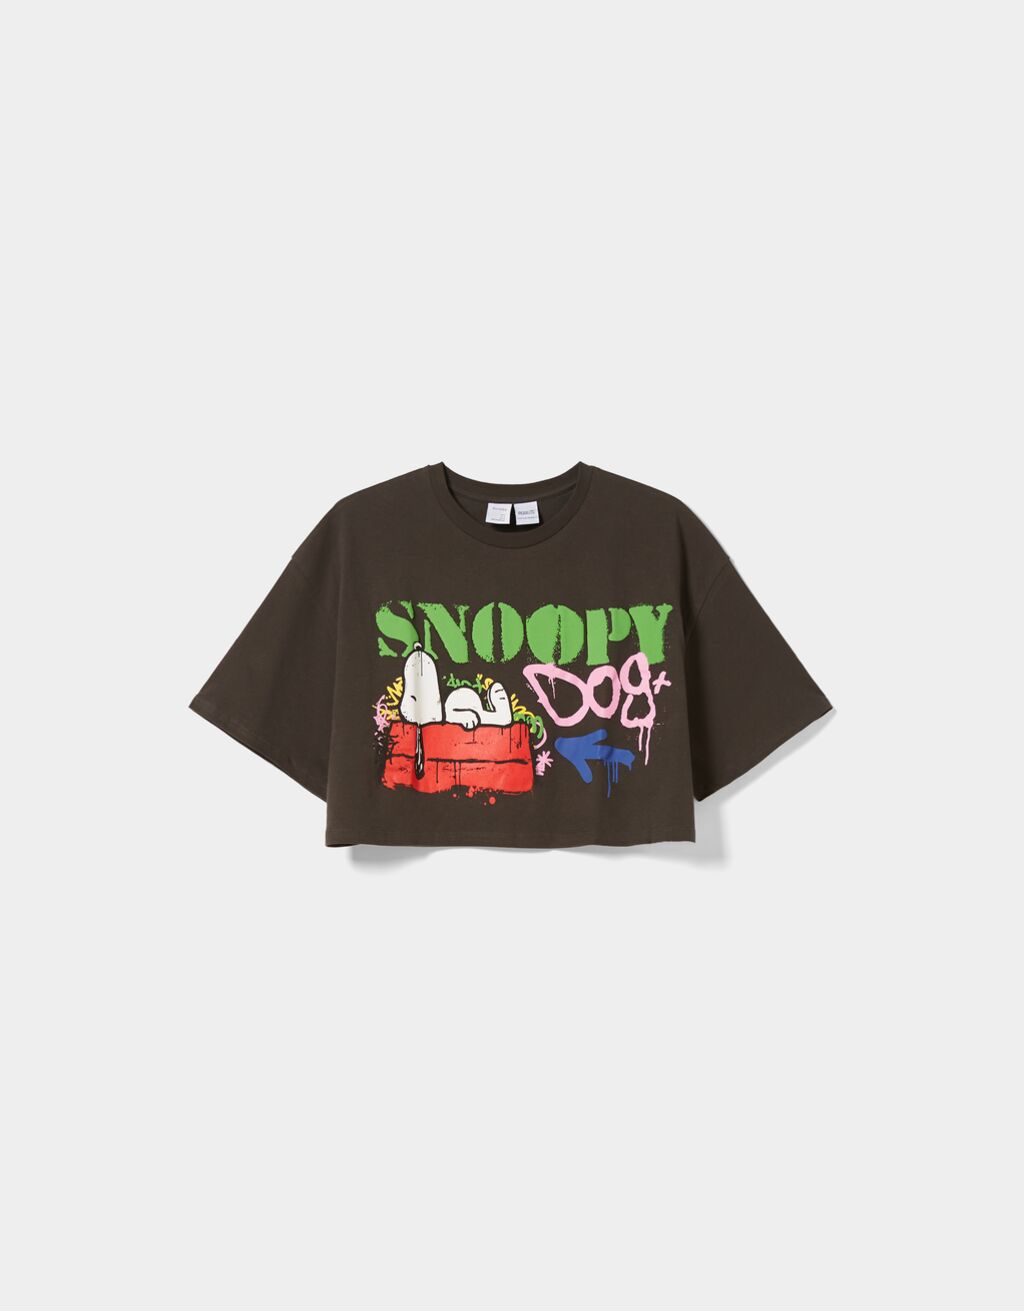 Snoopy Dog short sleeve T-shirt